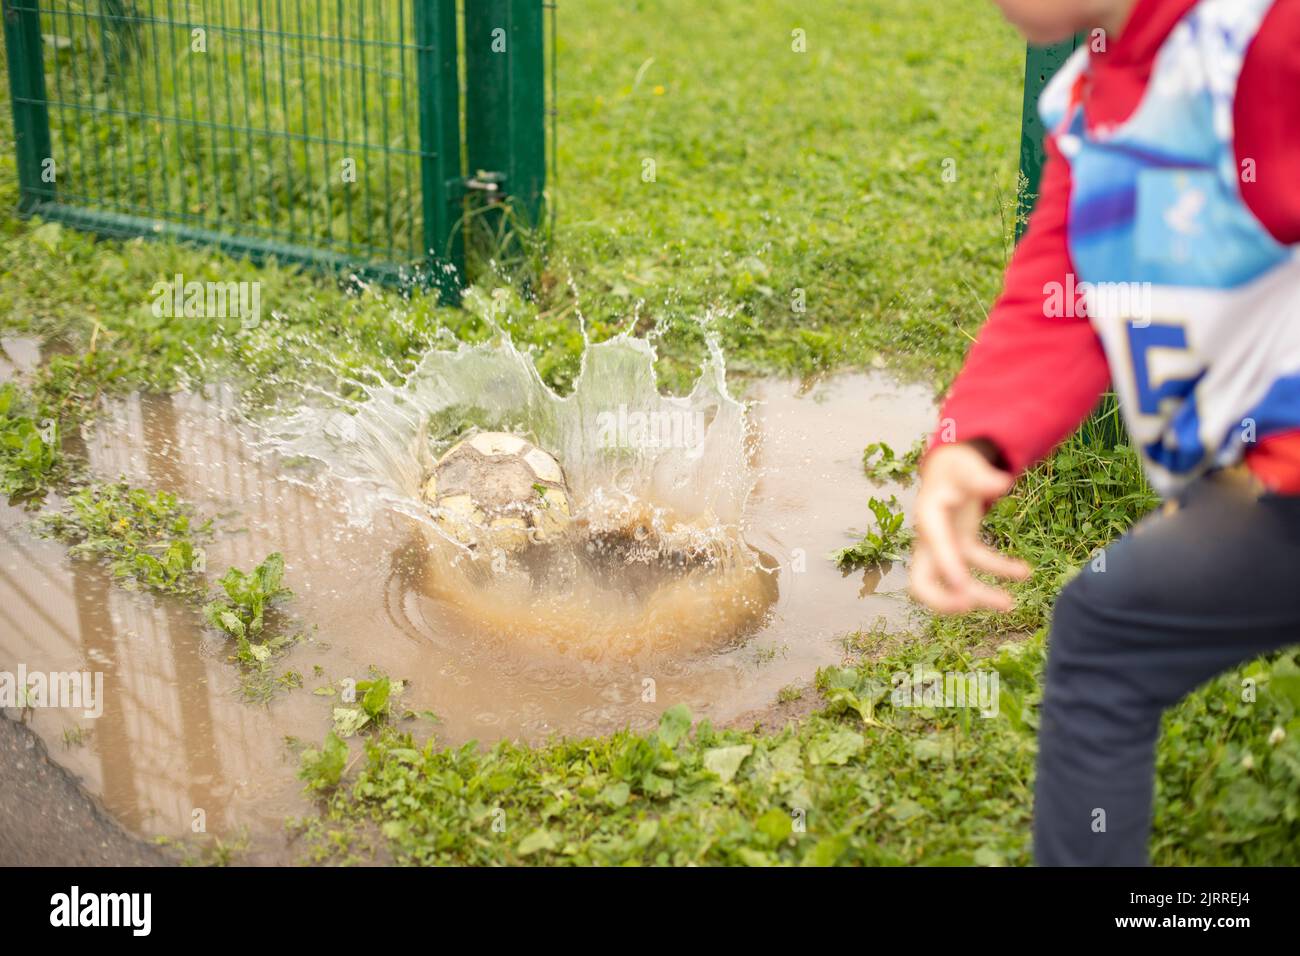 game in splash's background Stock Photo - Alamy